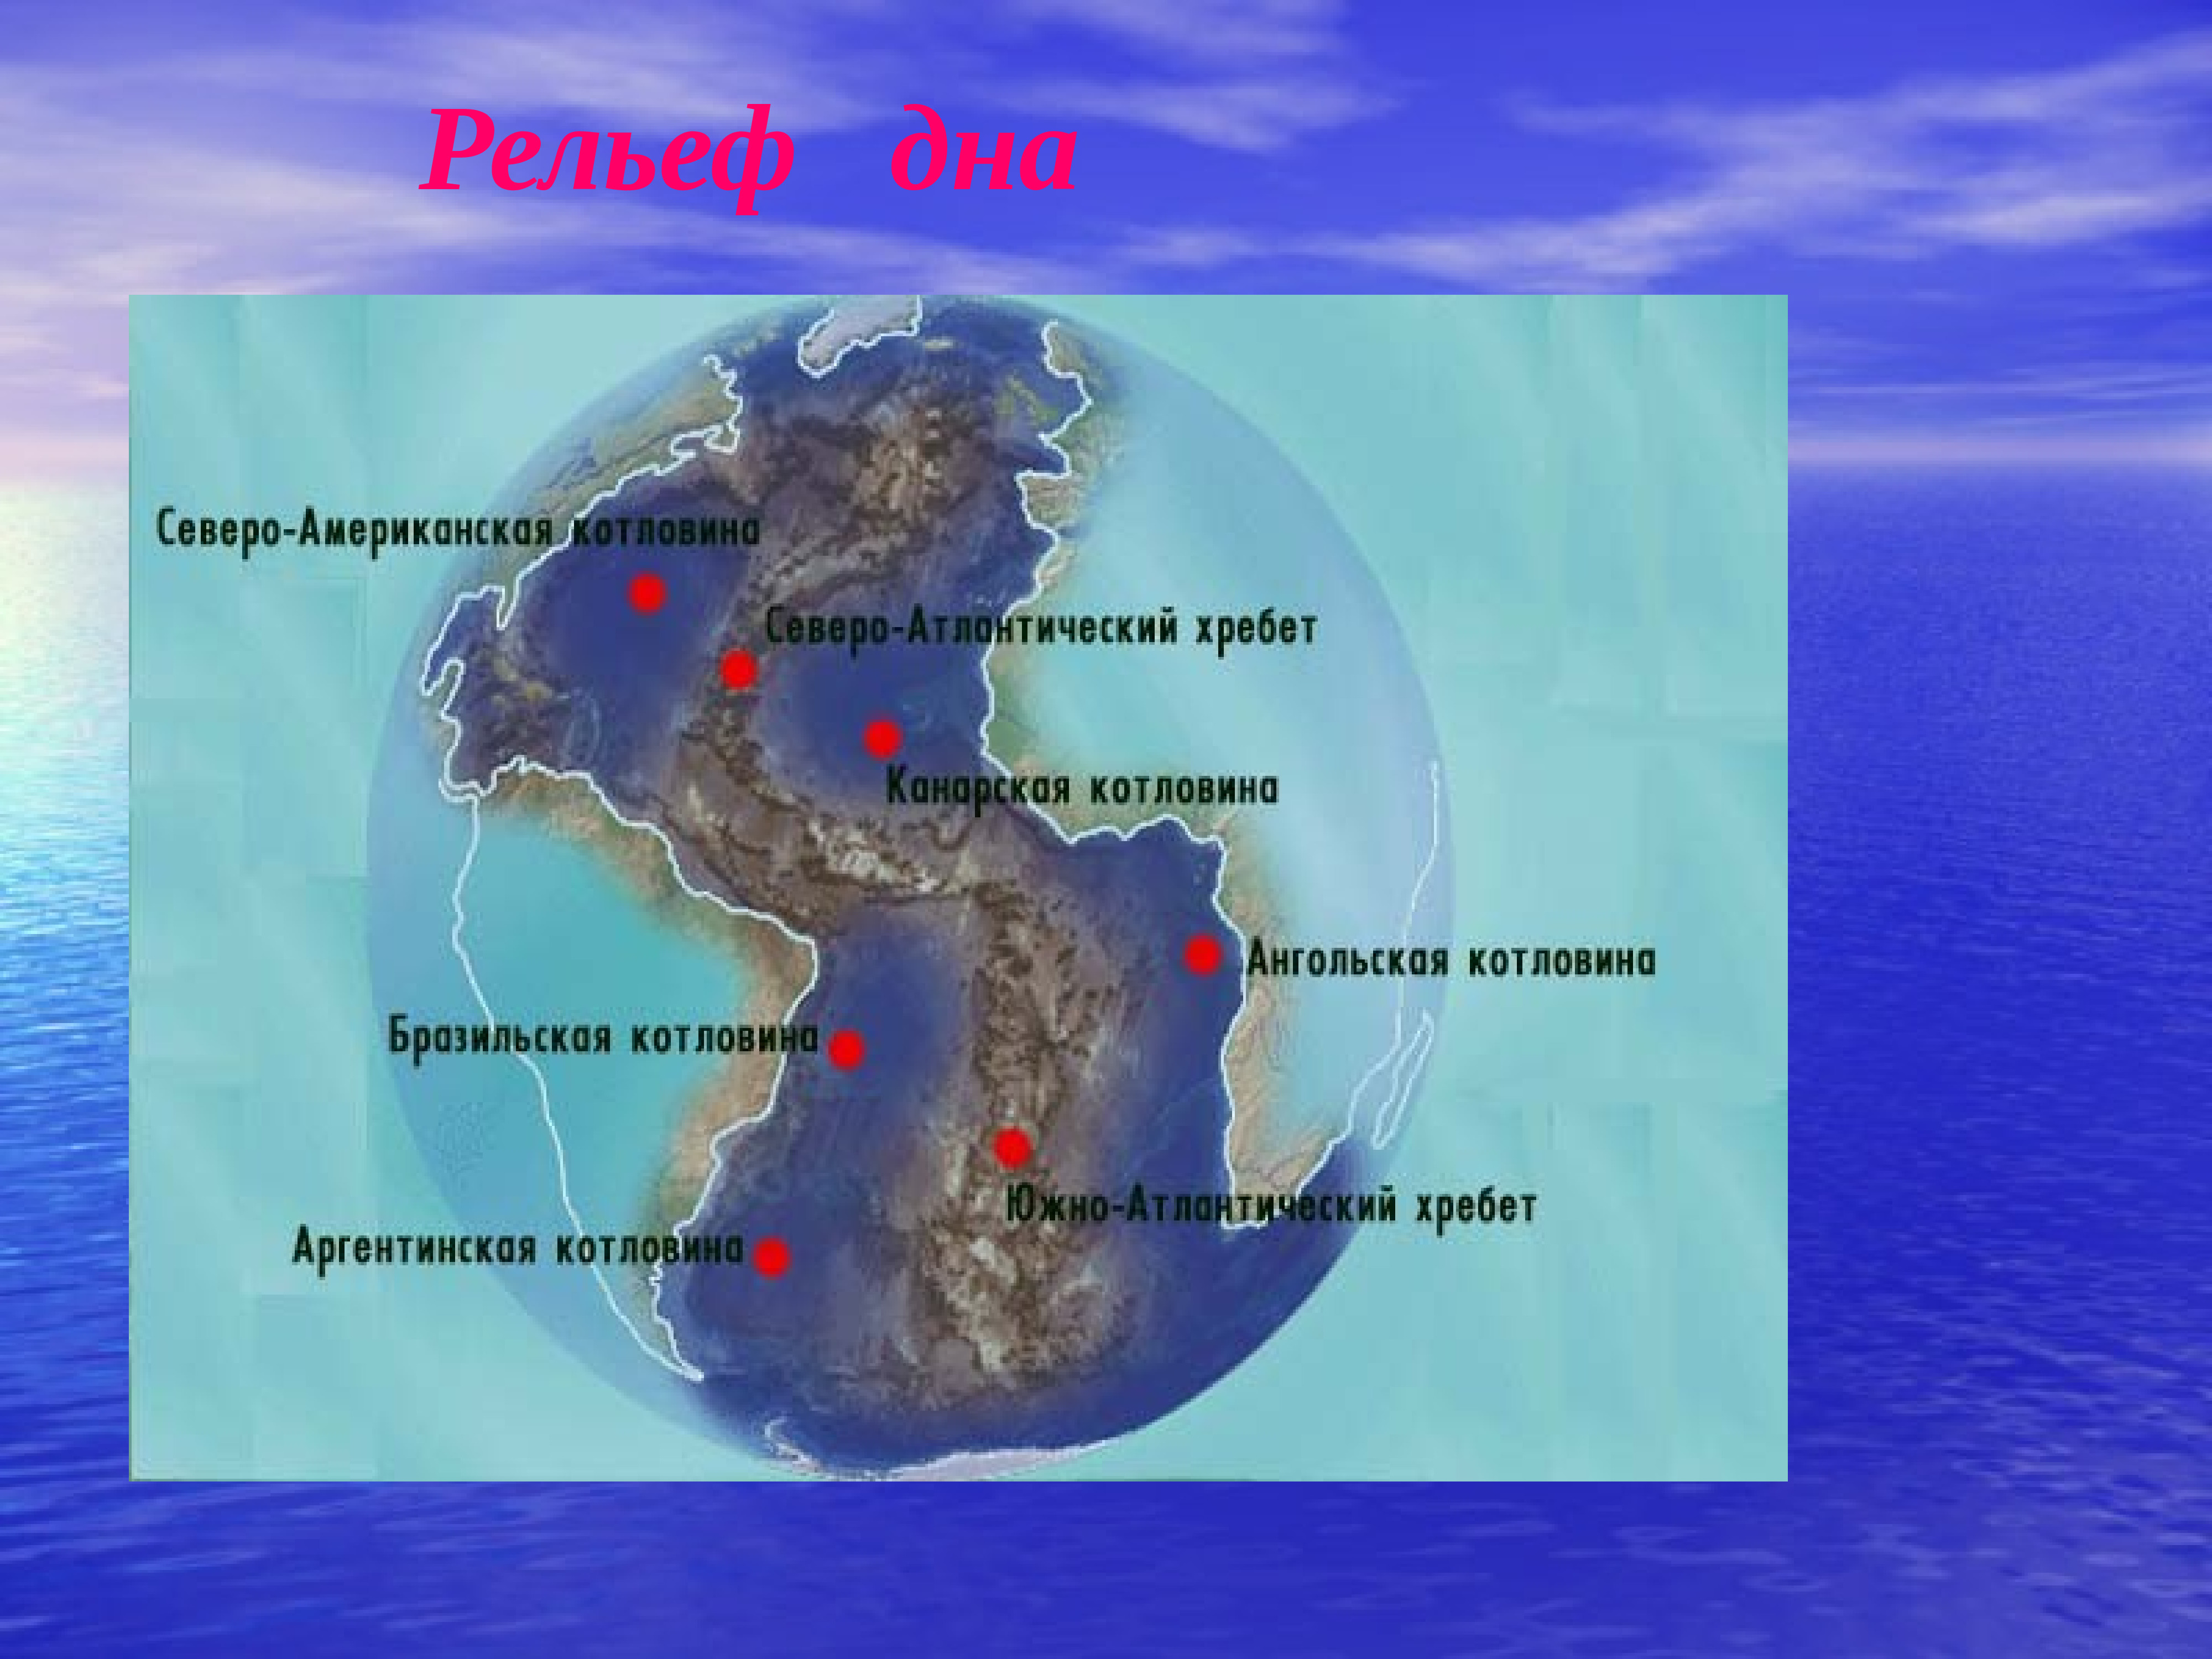 Рельеф атлантического океана представлен